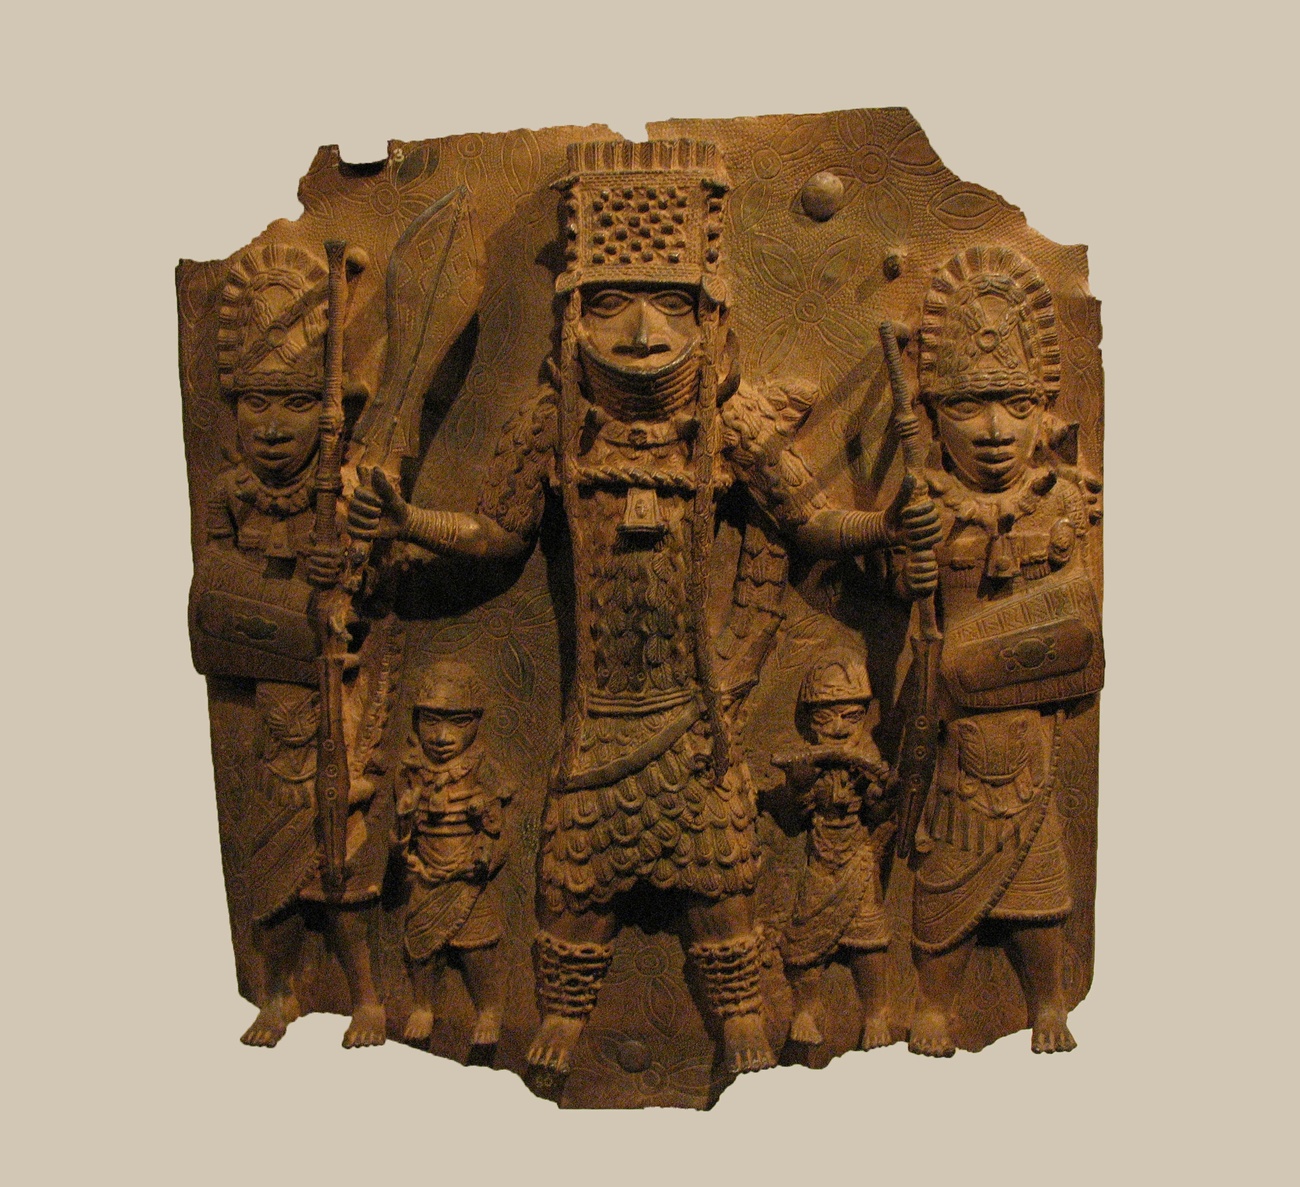 A brass plaque from the Benin Bronzes.